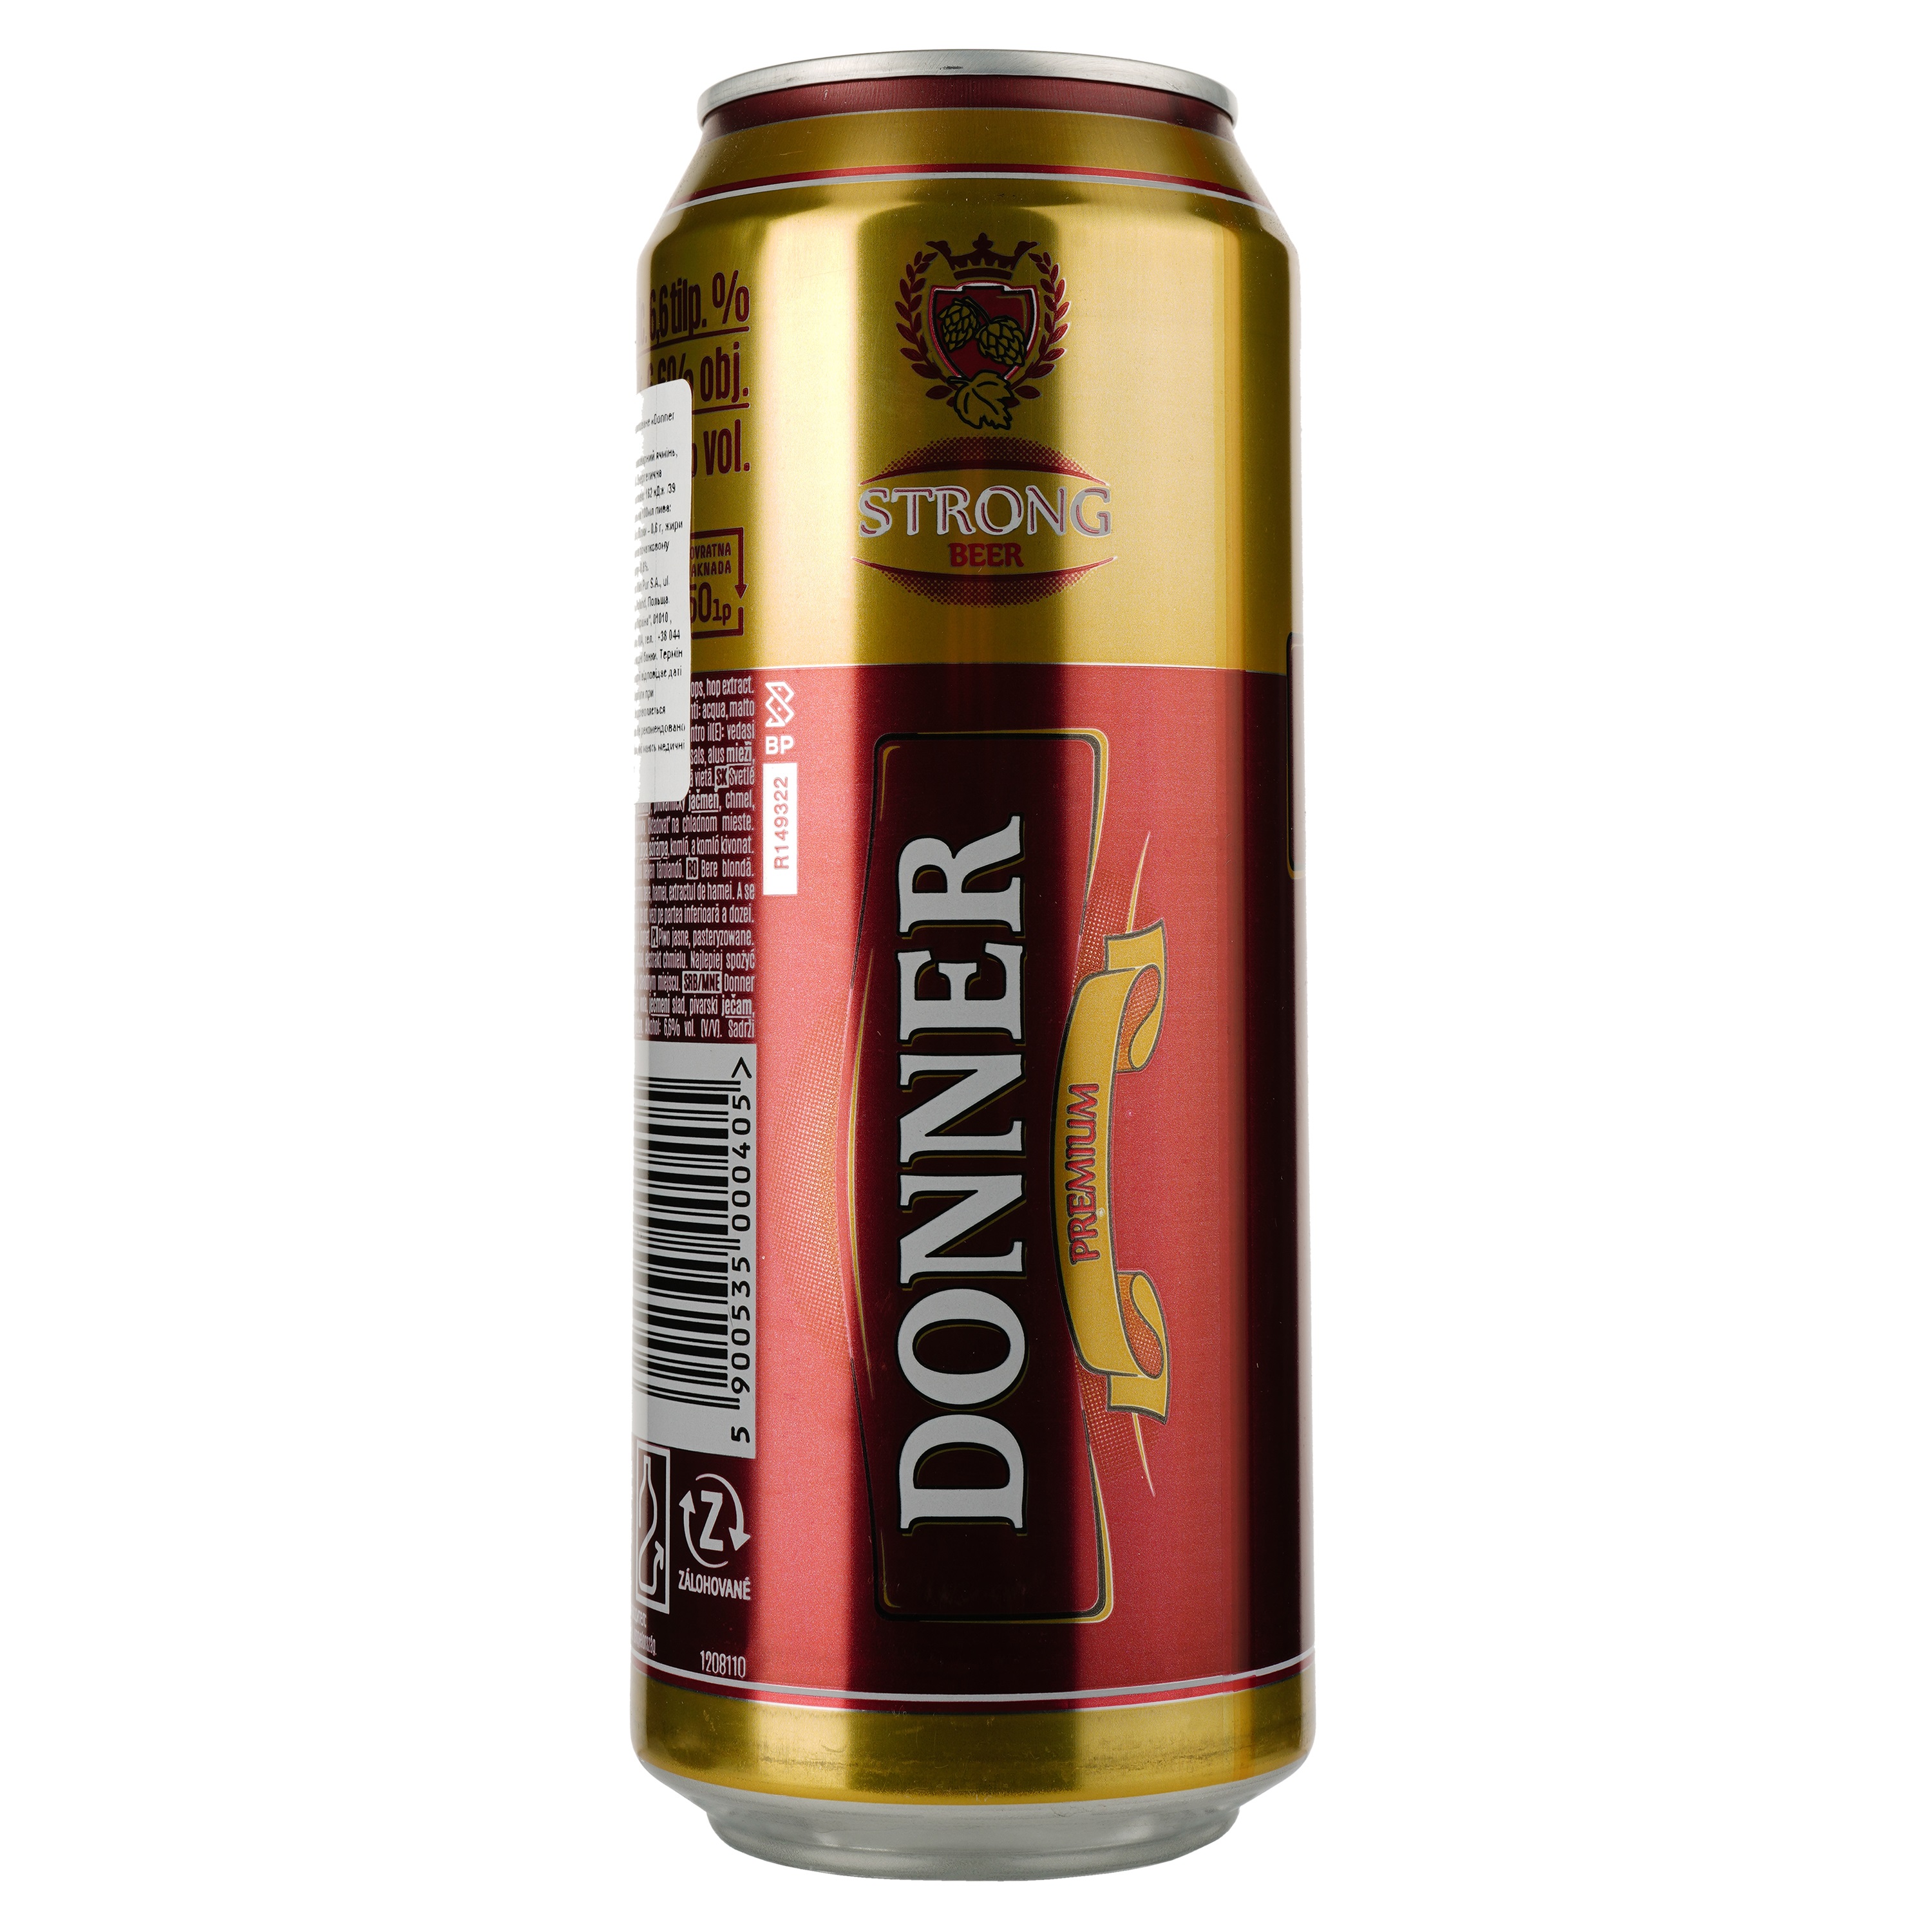 Пиво Donner Strong світле, 6.6%, з/б, 0.5 л - фото 2